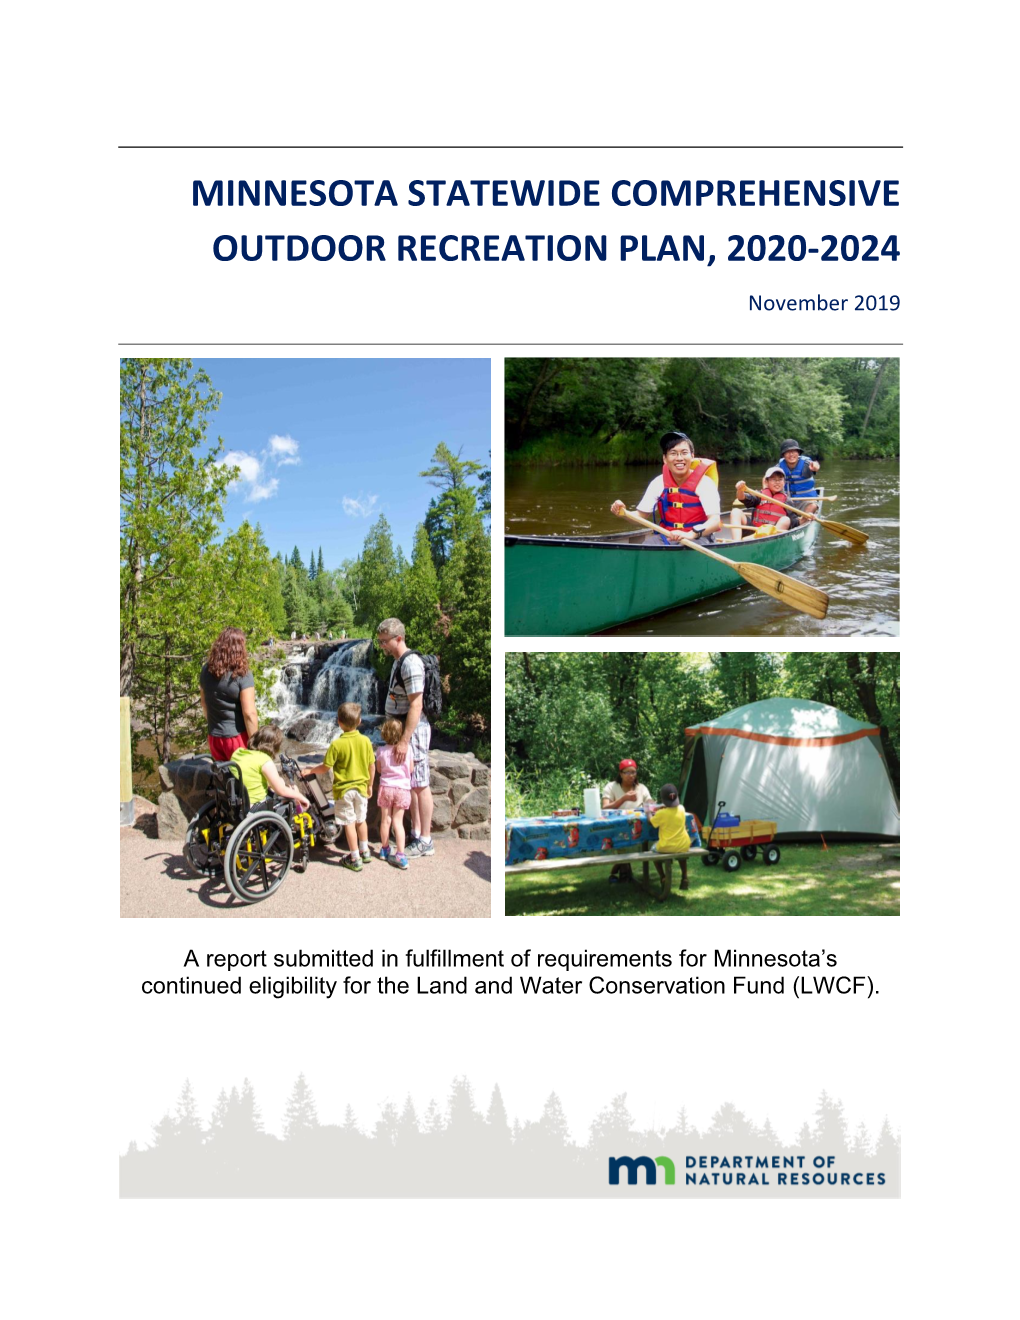 Minnesota State Comprehensive Outdoor